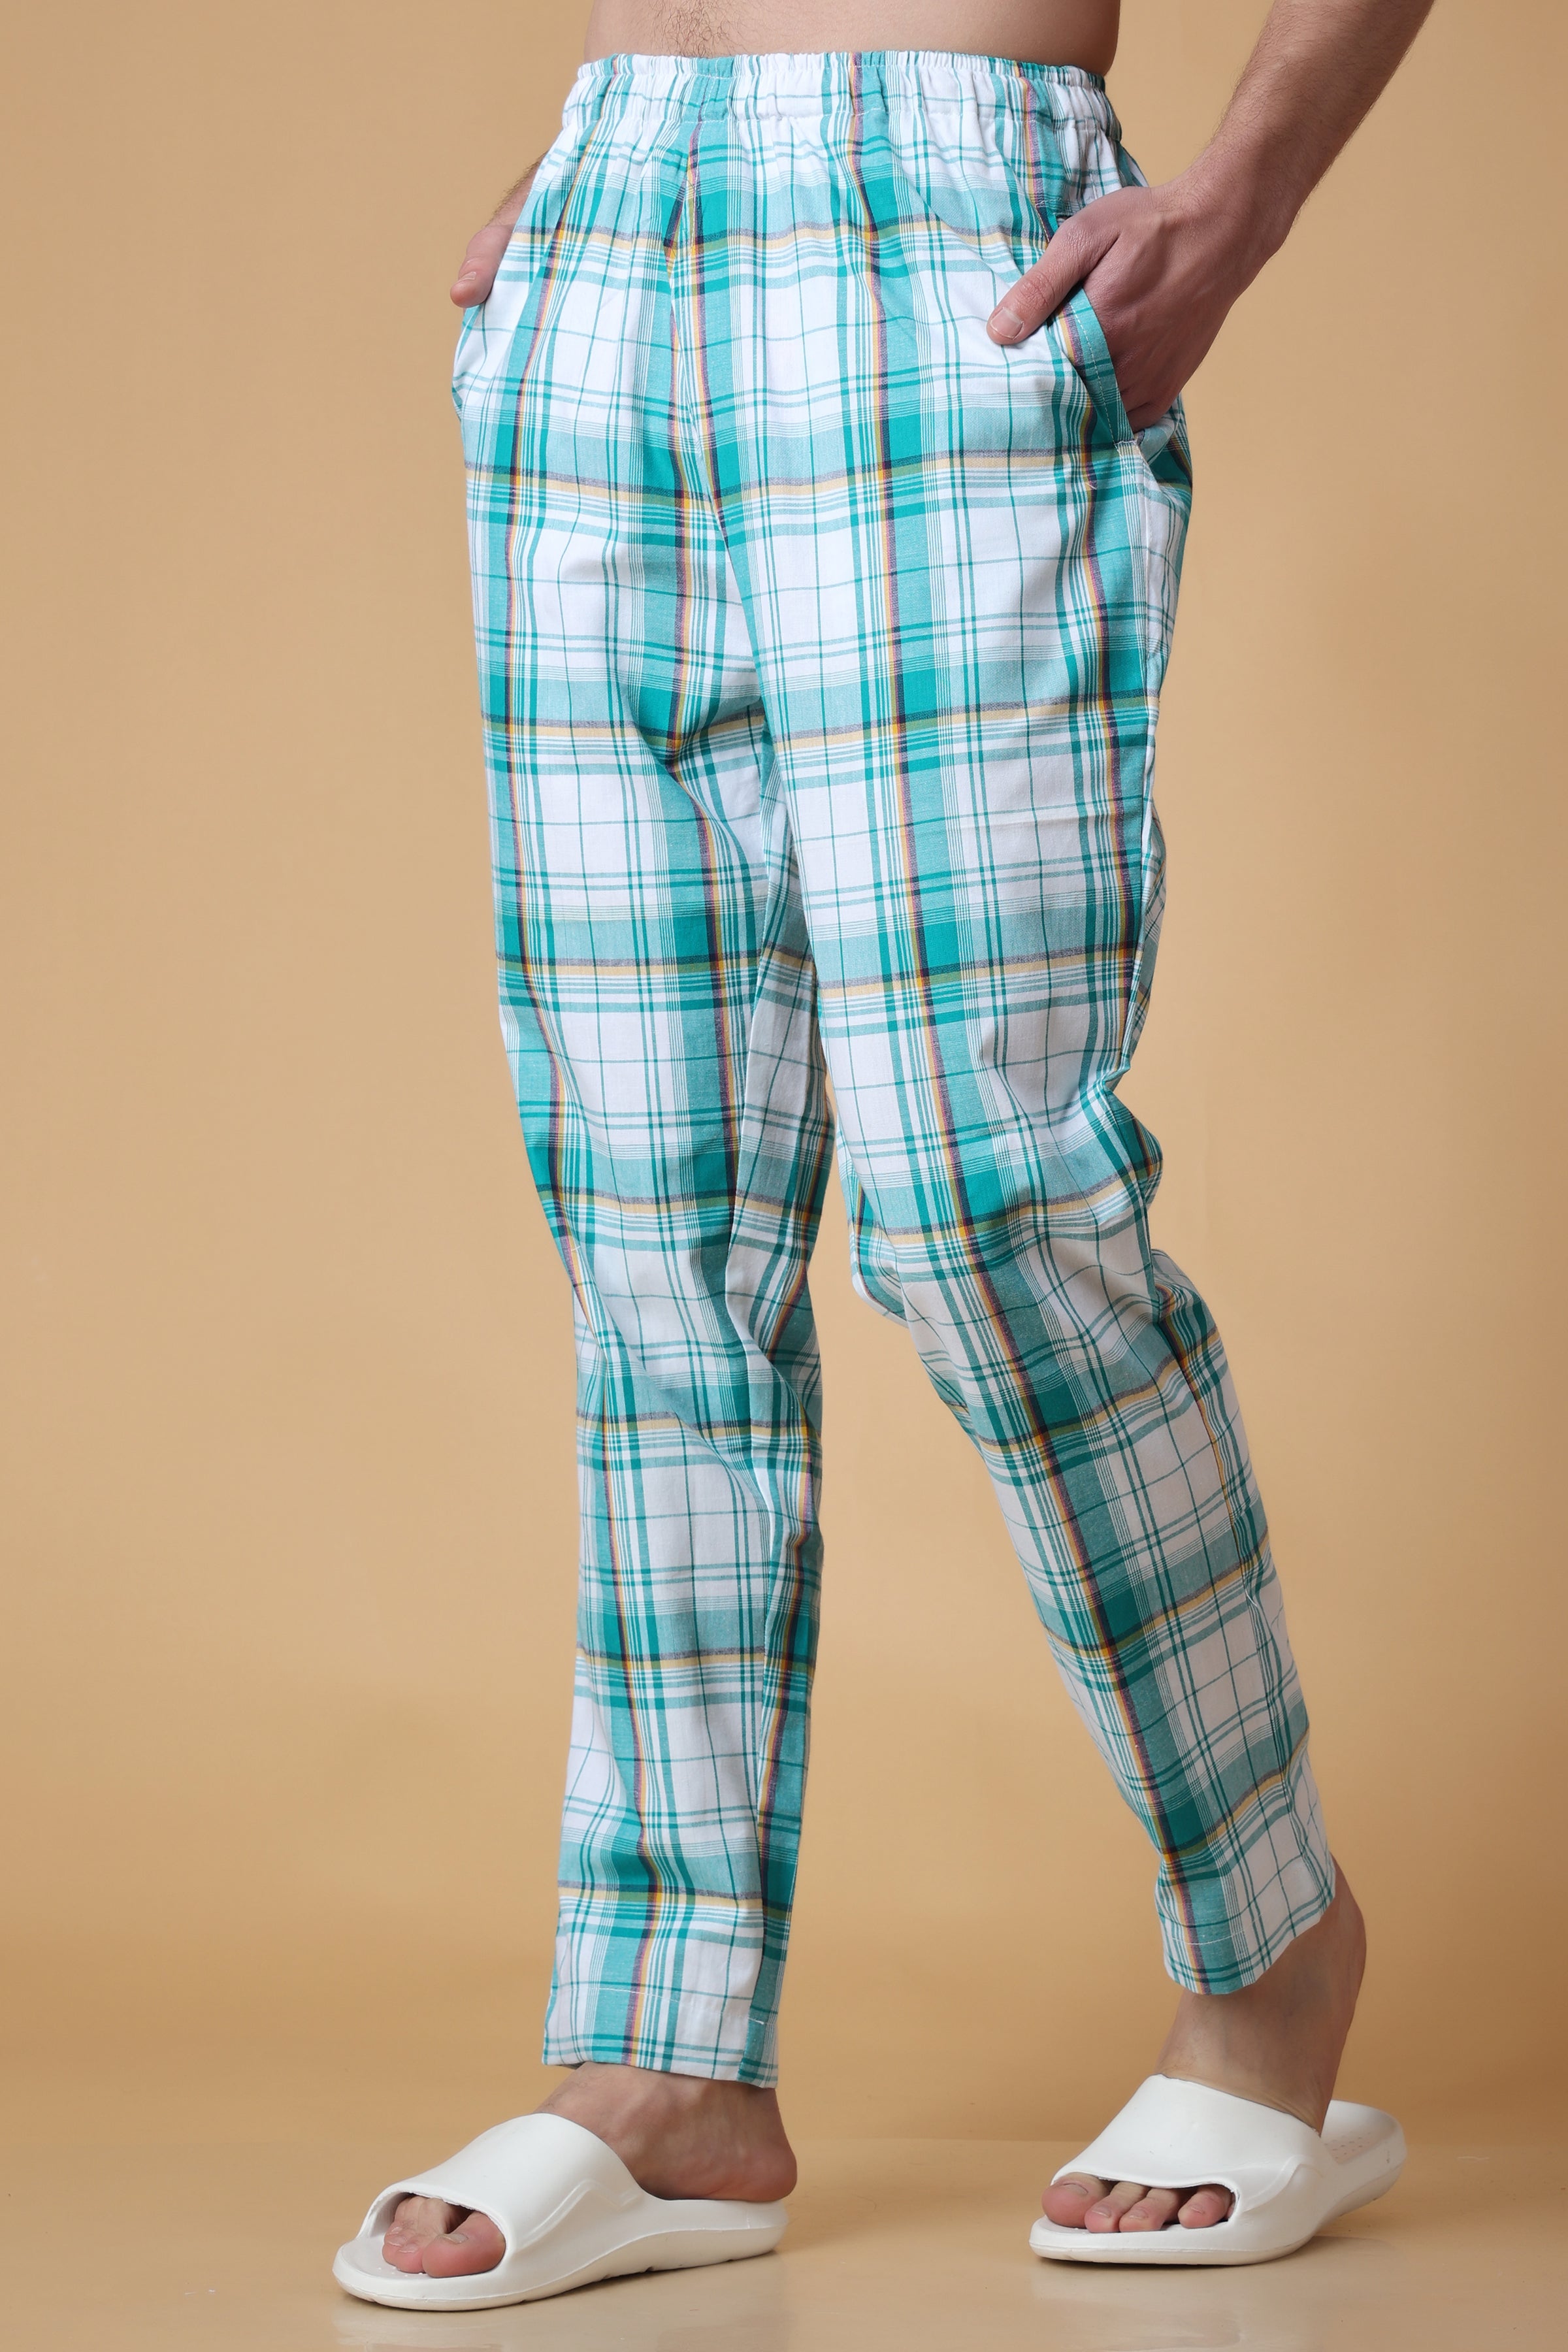 Men's Lounge Pants - Soft Cotton Jersey Knit Lounge Bottoms, Pajama Pants  With 2 Deep Side Pockets, 3-Pack | Michaels